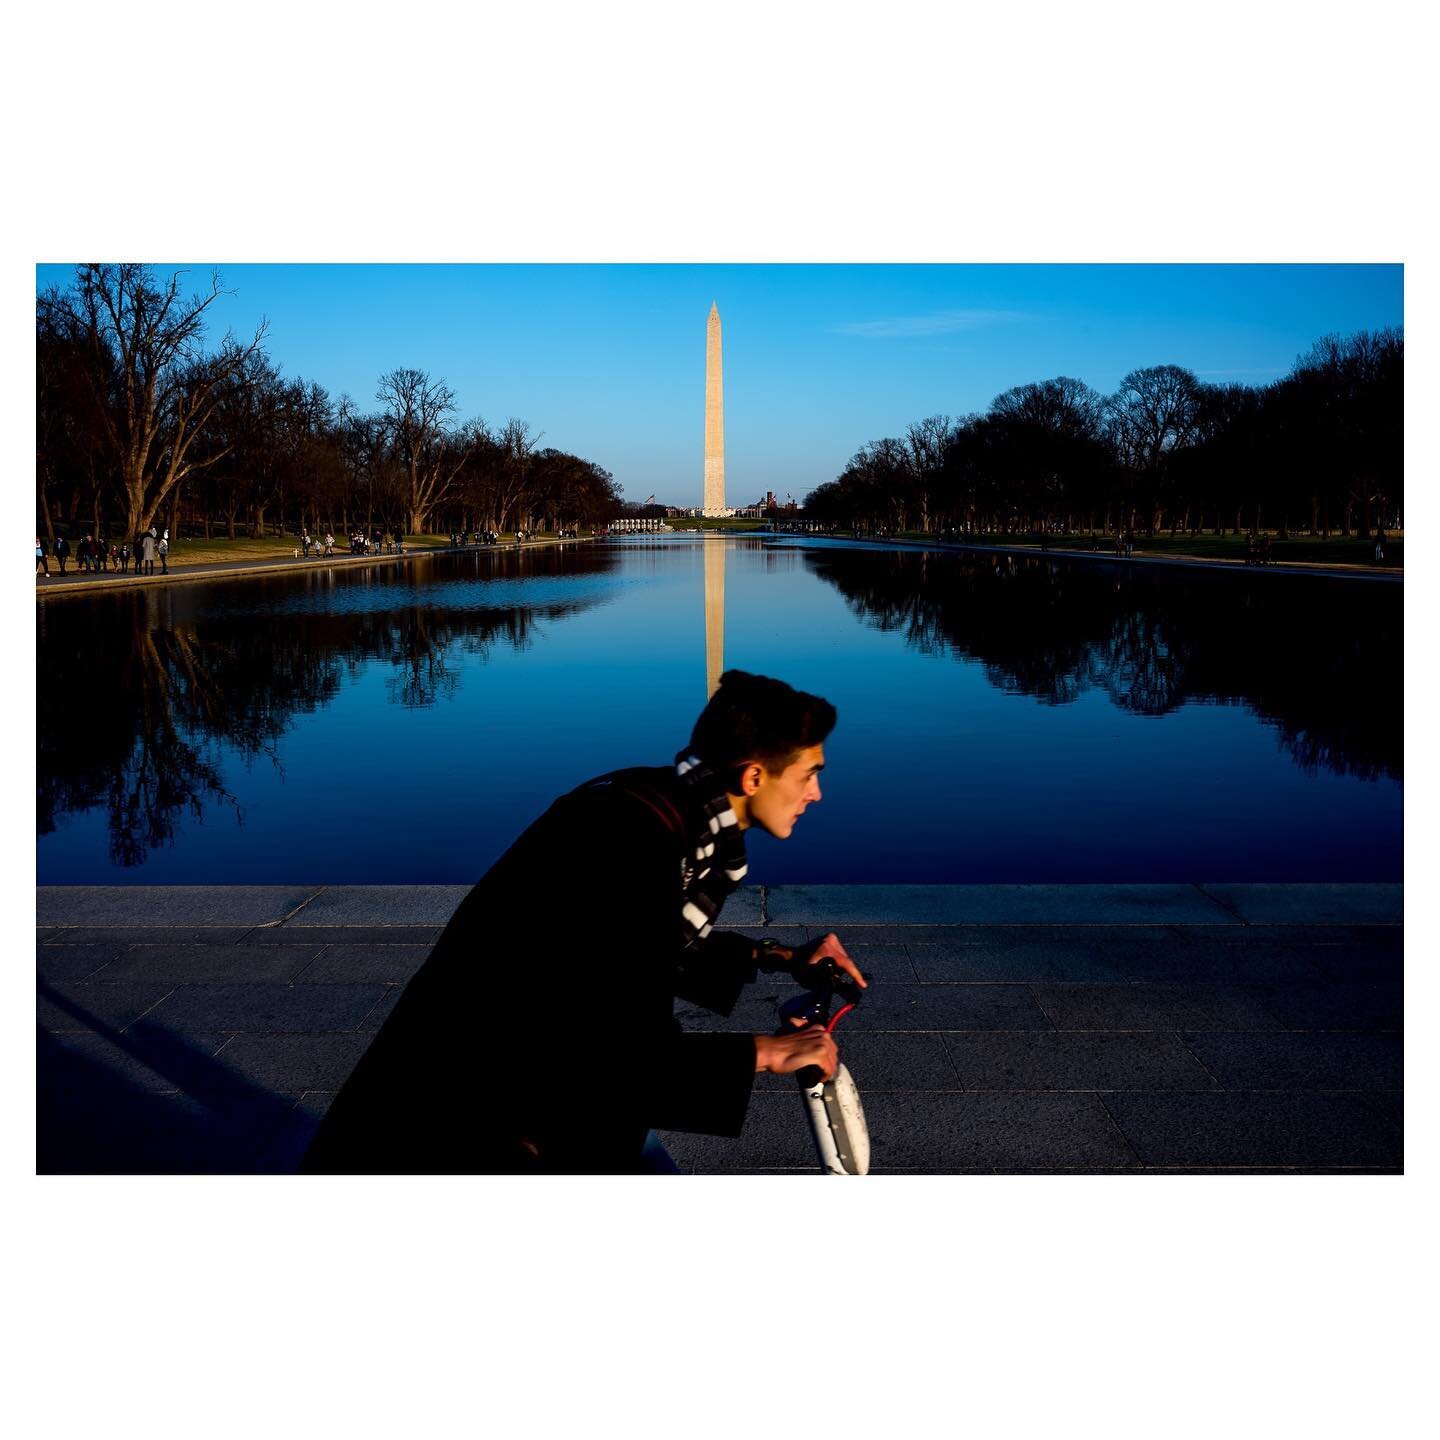 Washington DC, 2020 

.
.
.
.
.
.
.

#streetphotography
#everybodystreet
#bnw_society
#bnwphotography
#street_photography 
#streetdreamsmag 
#blackandwhitestreetphotography 
#blacknwhite_perfection 
#projectasphalt
#DC_SPC
#igmasters 
#streetscenesma